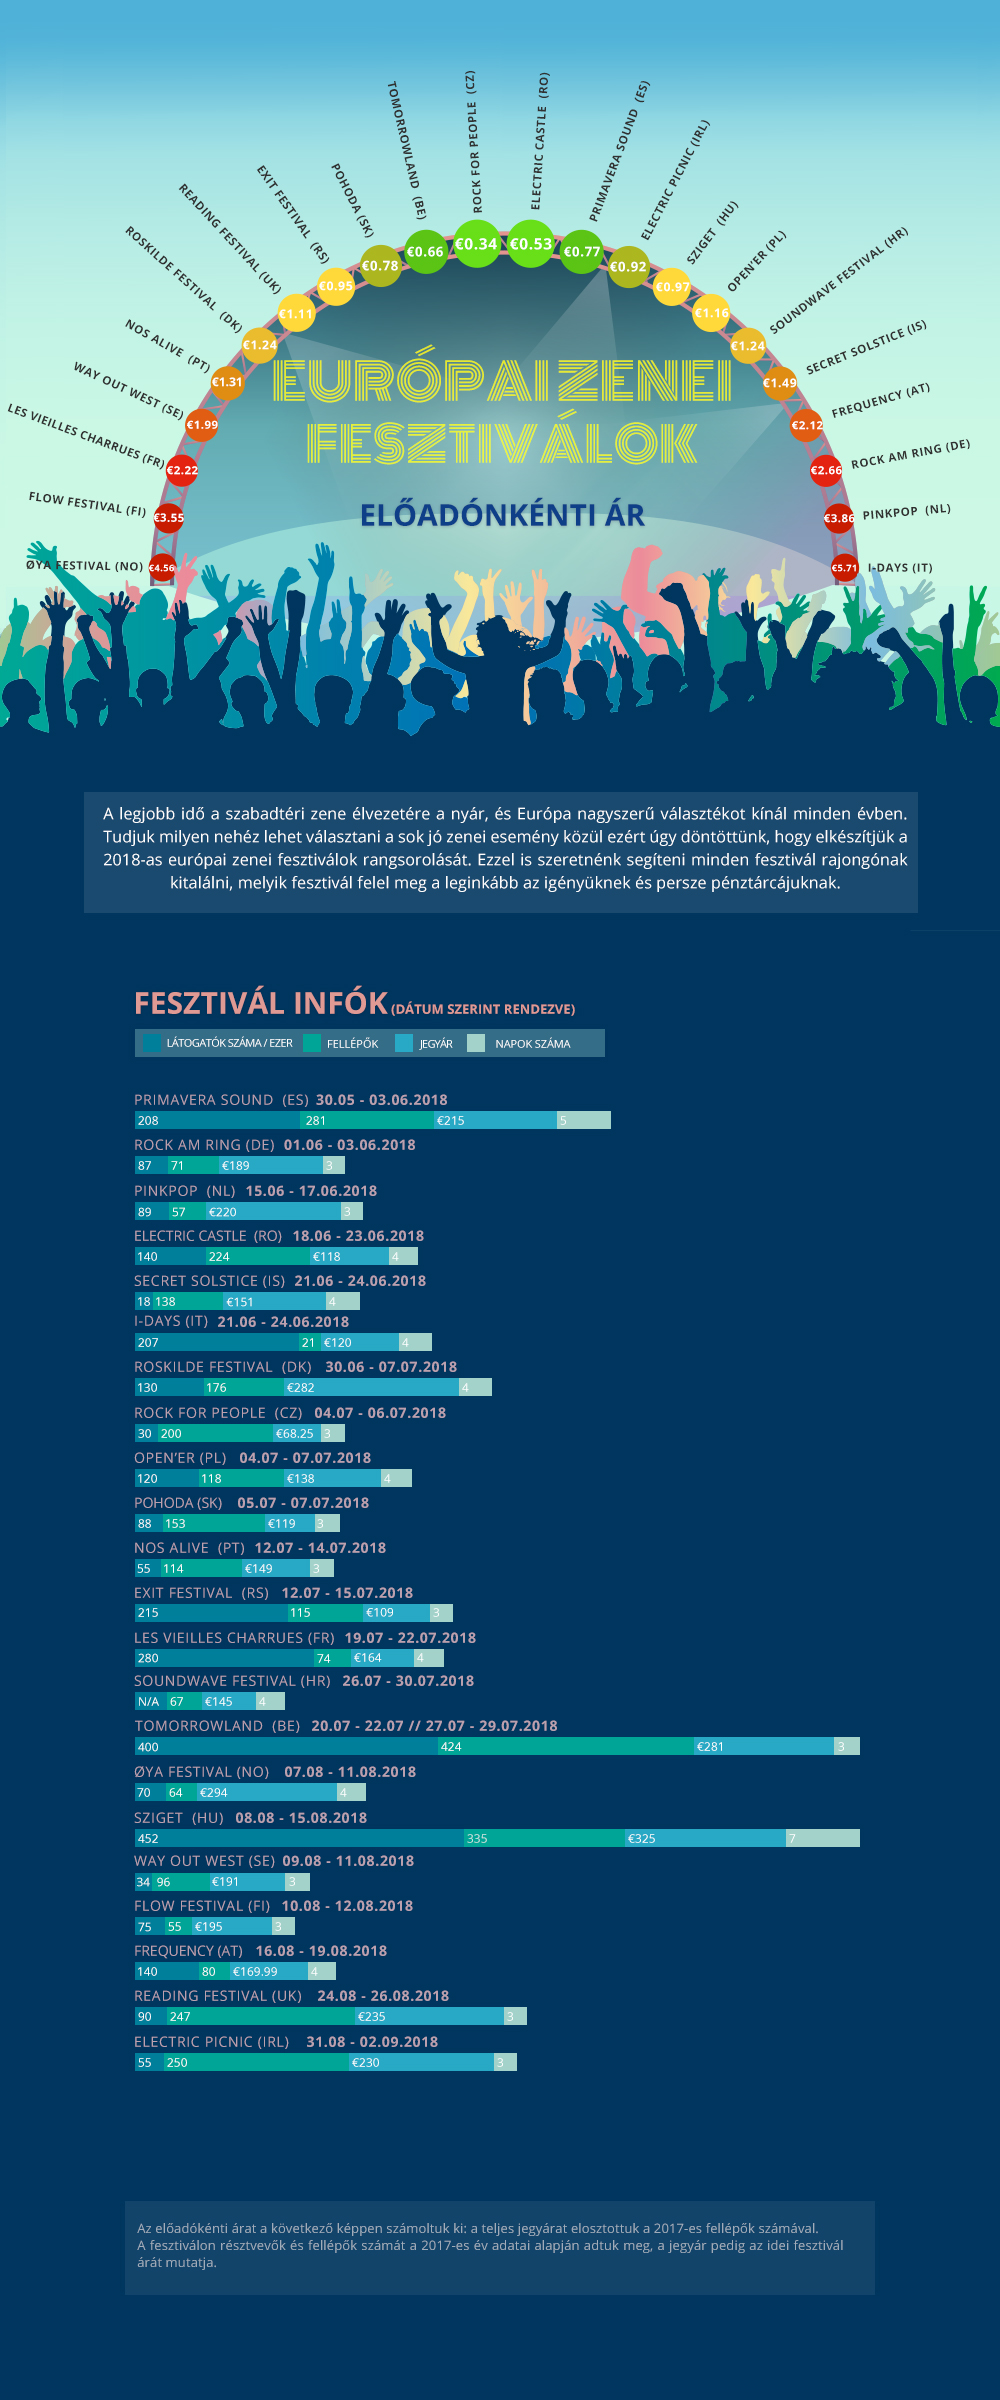 infografia festivales Europa